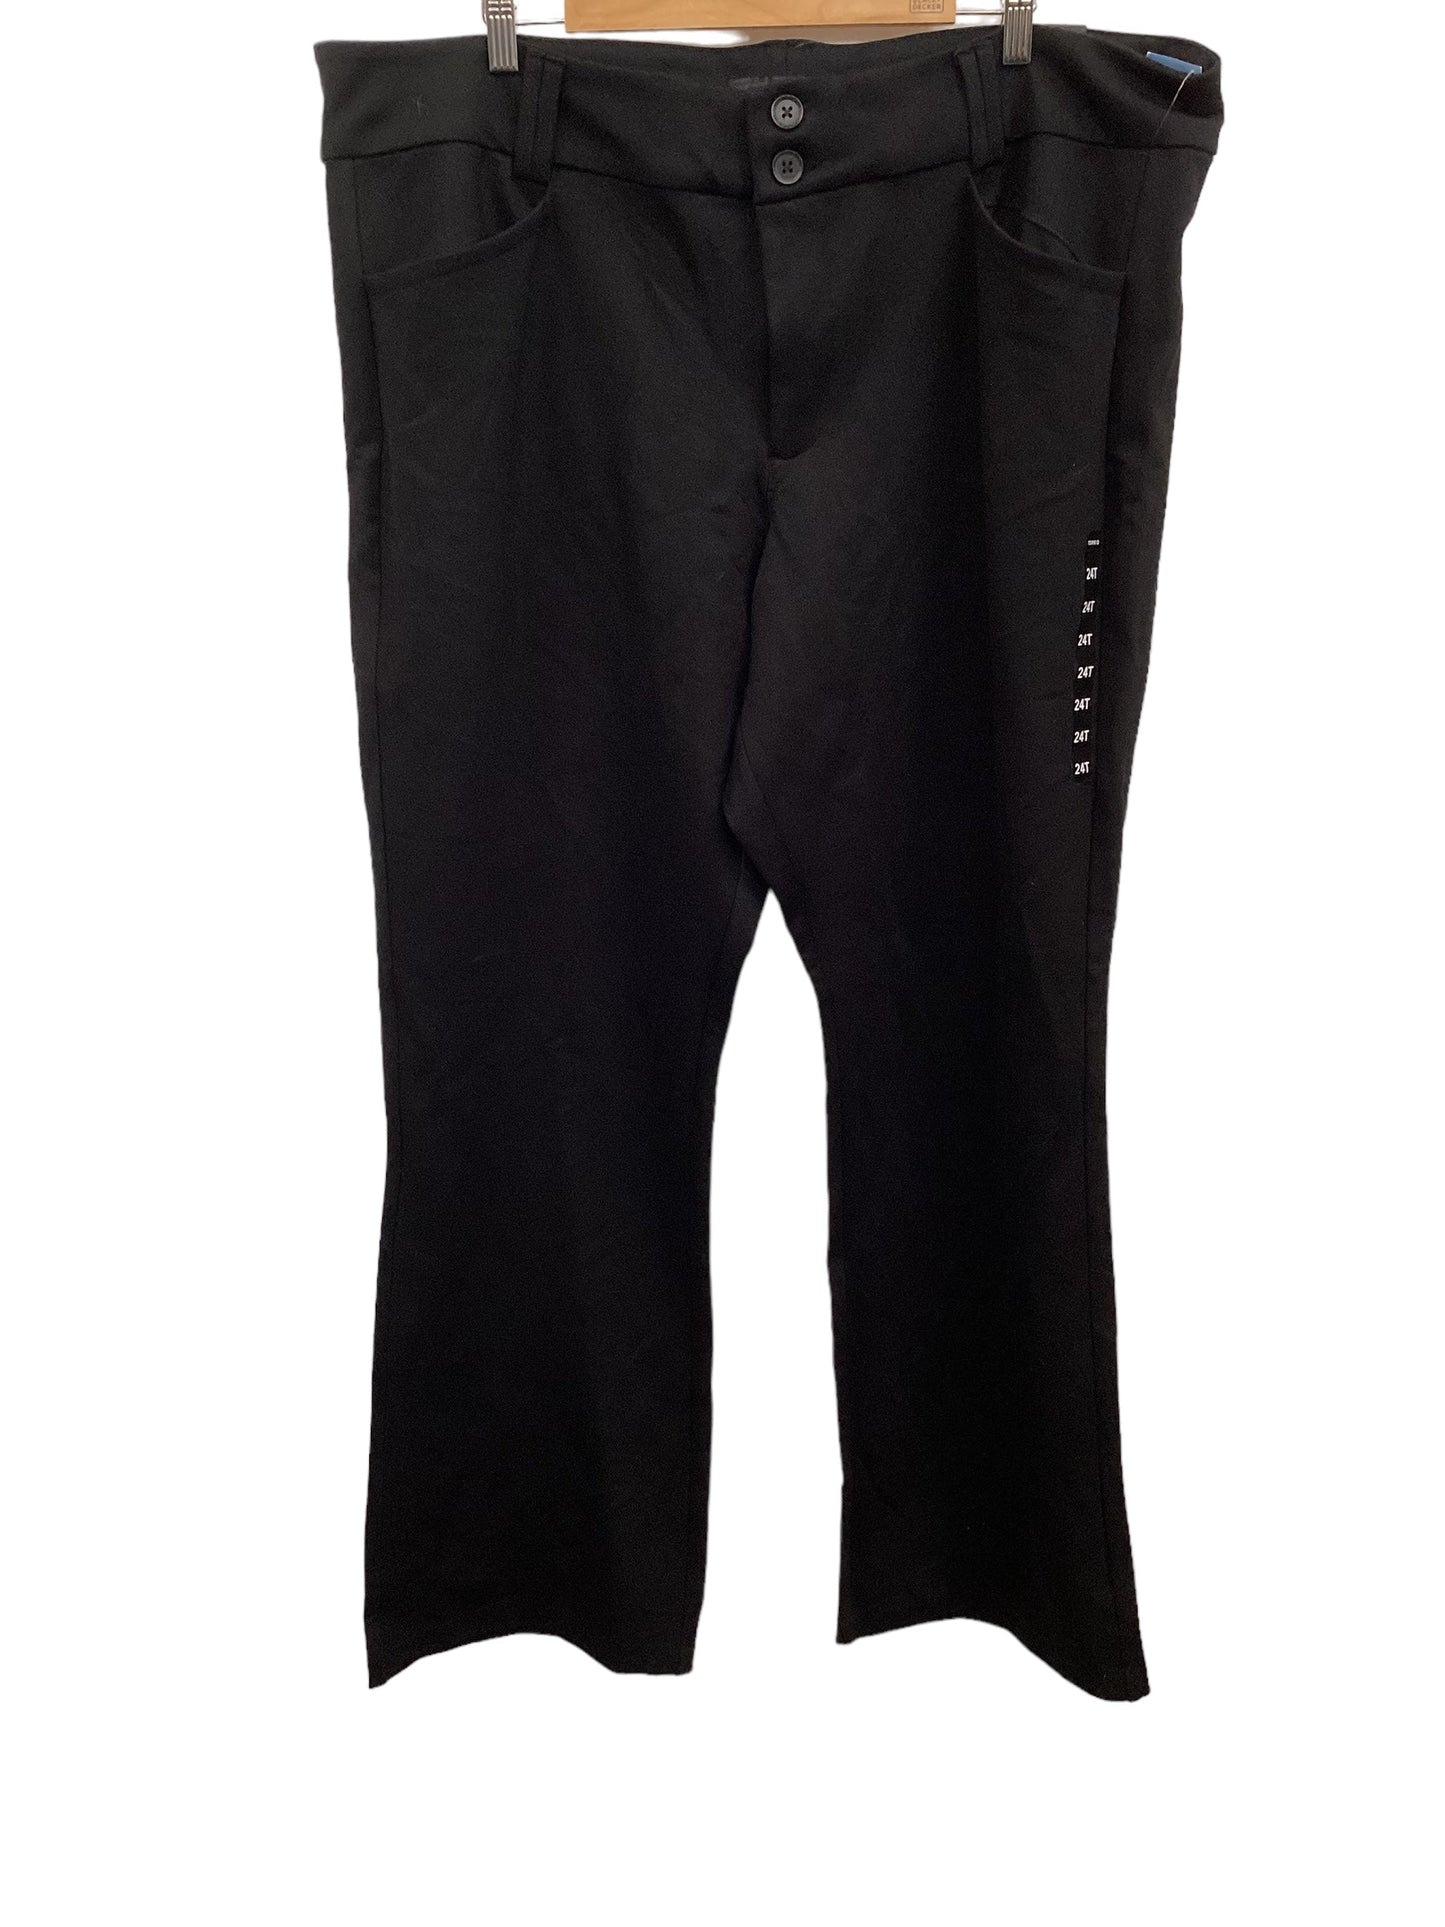 Black Pants Other Torrid, Size 24